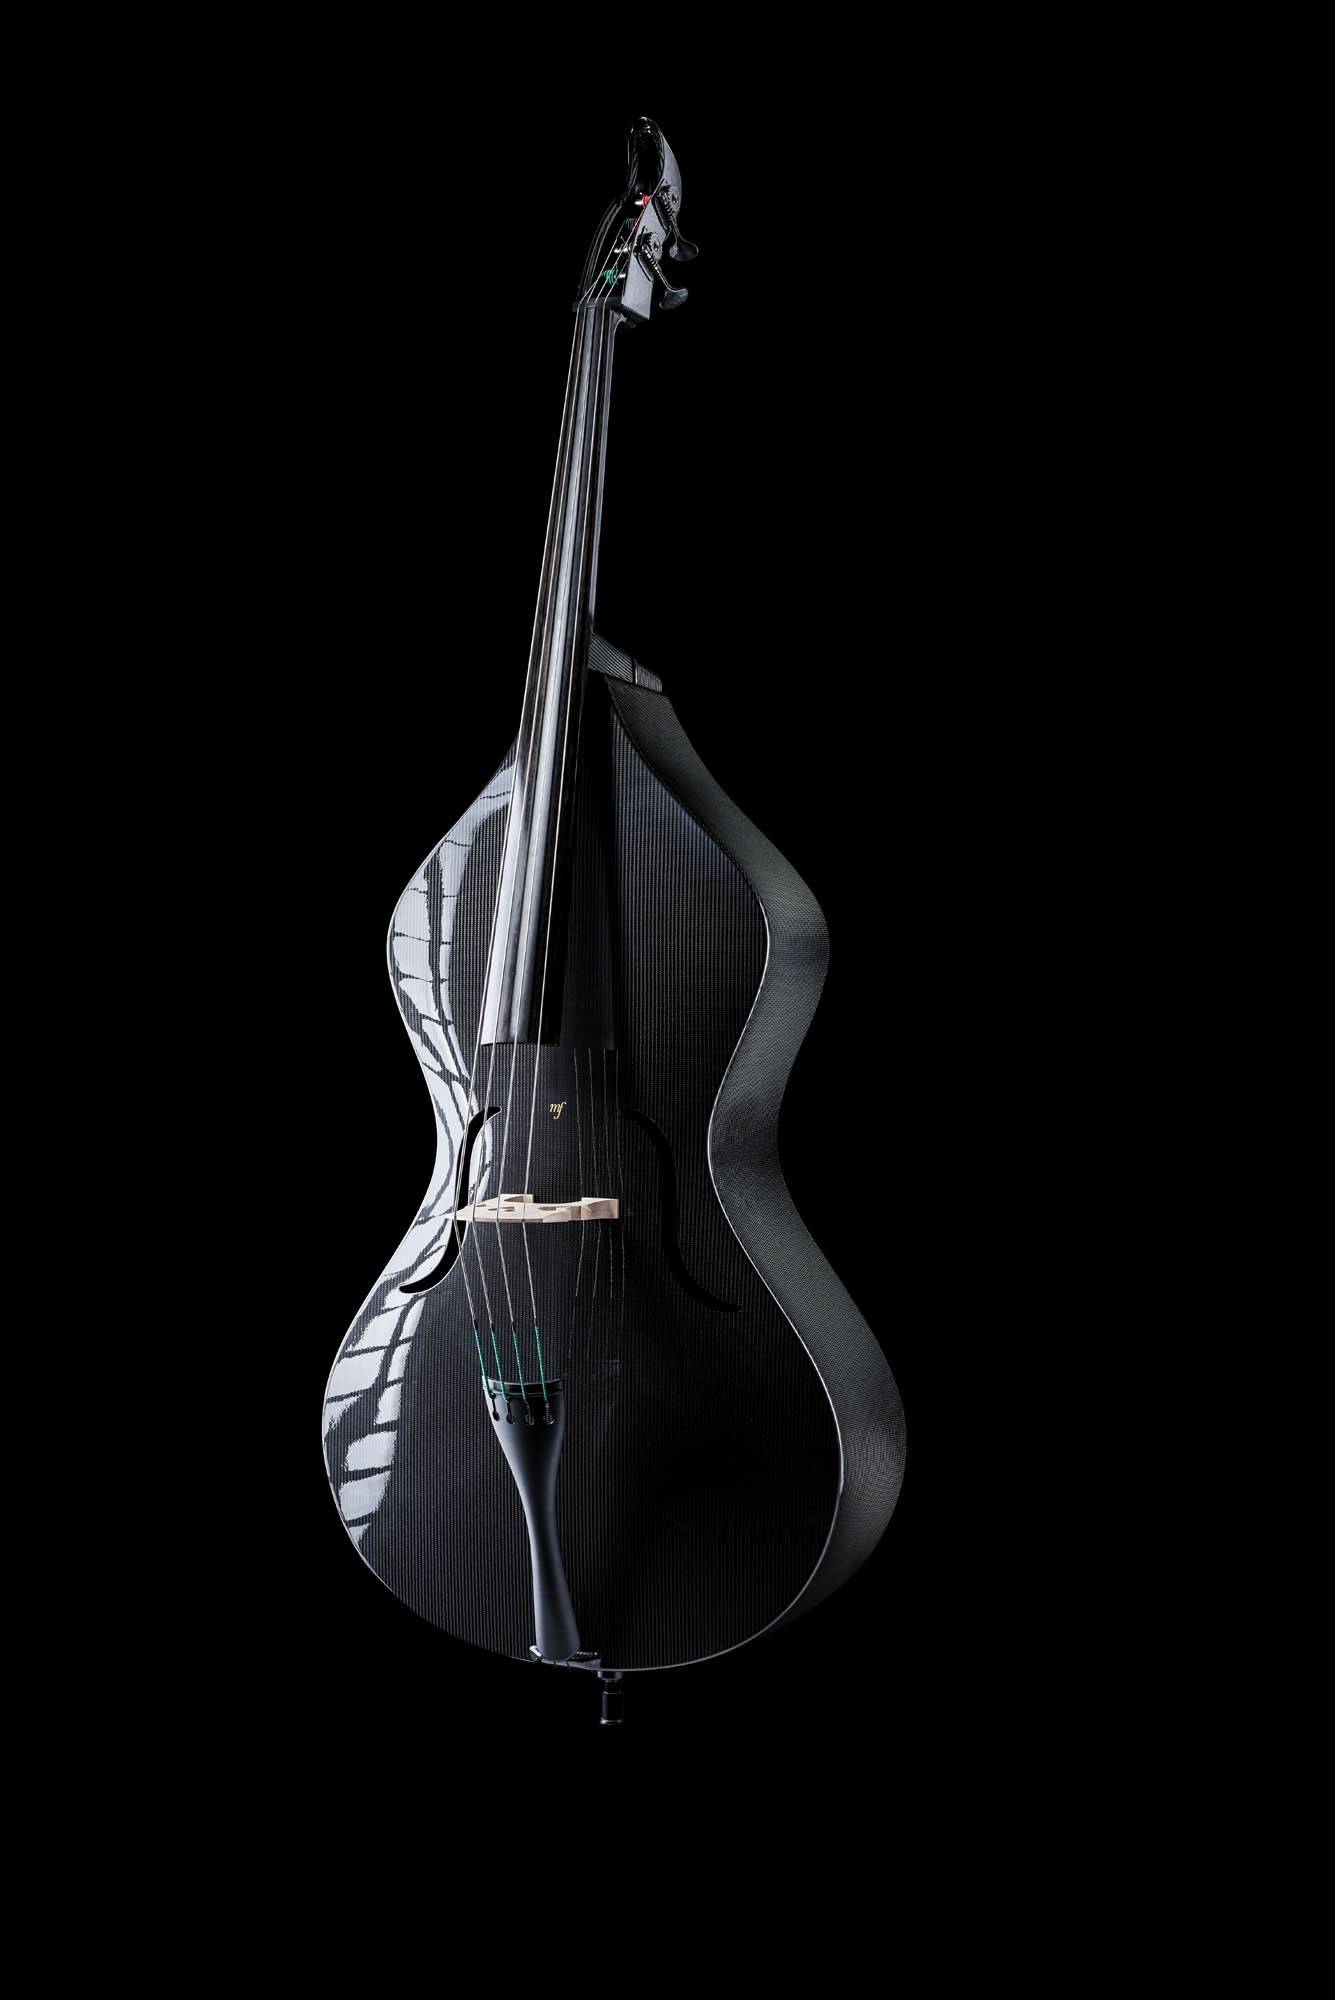 Carbon double bass, removable neck